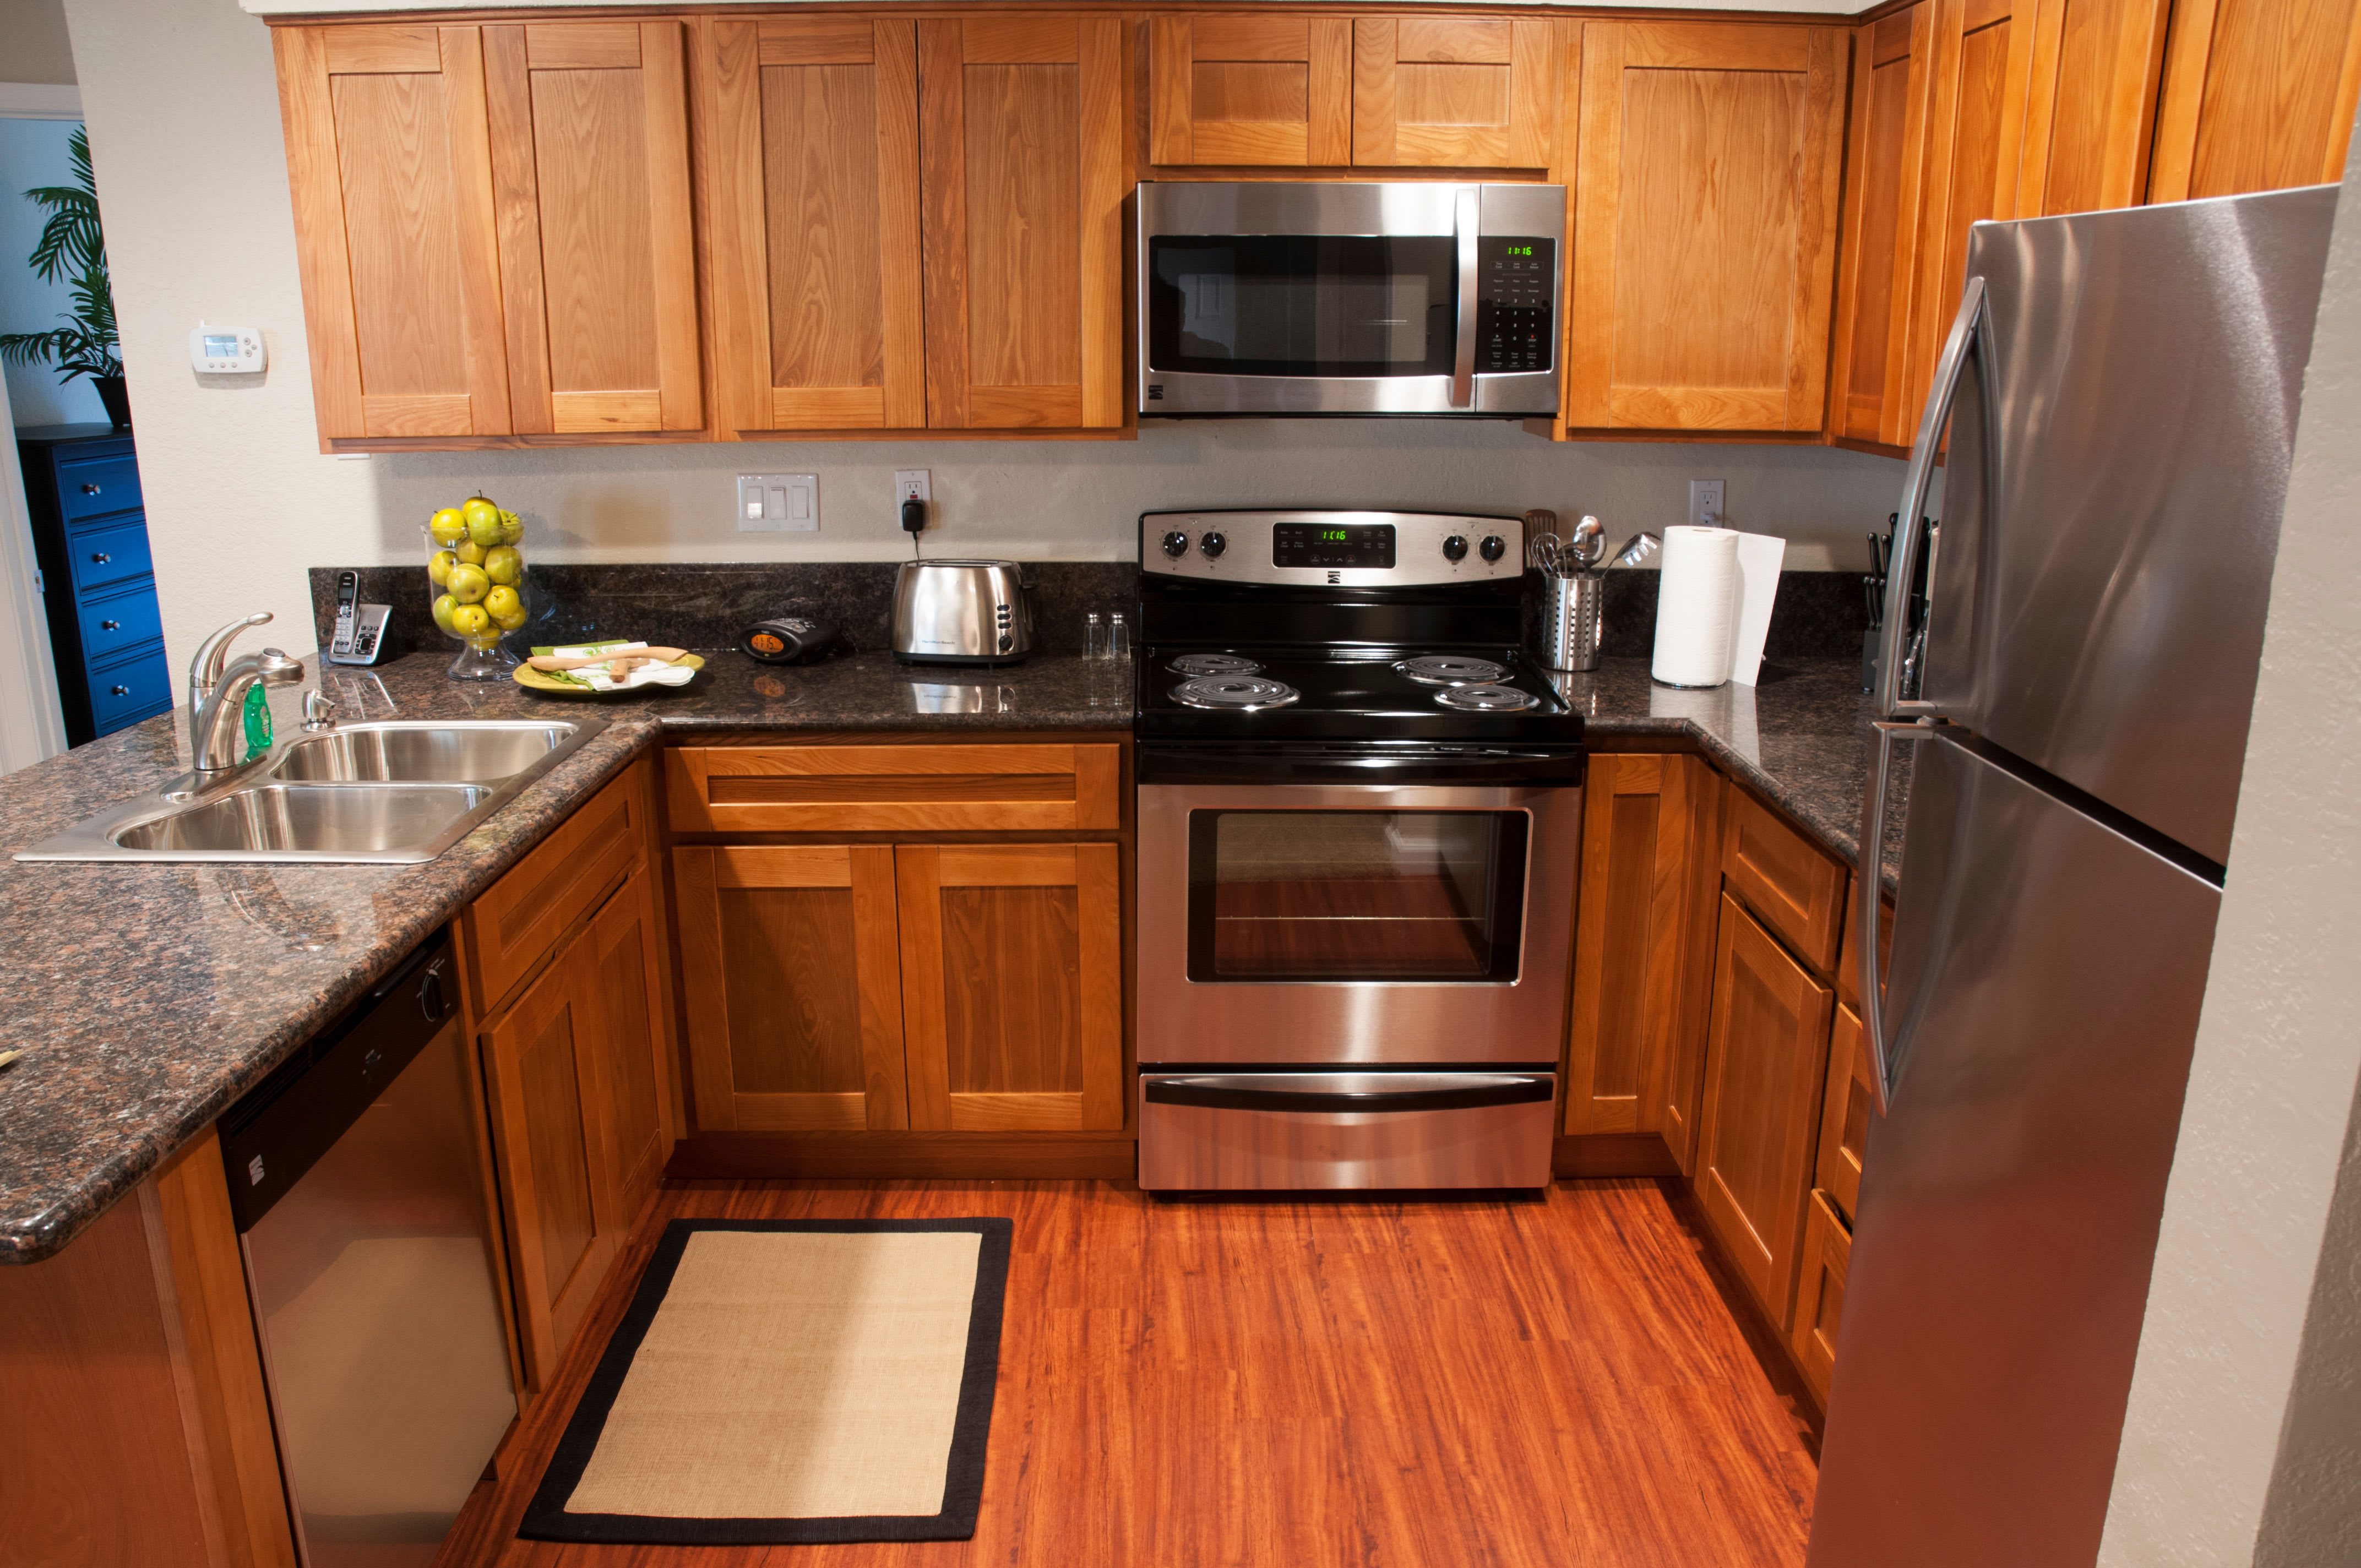 Enjoy a beautiful kitchen at Carmel Woods